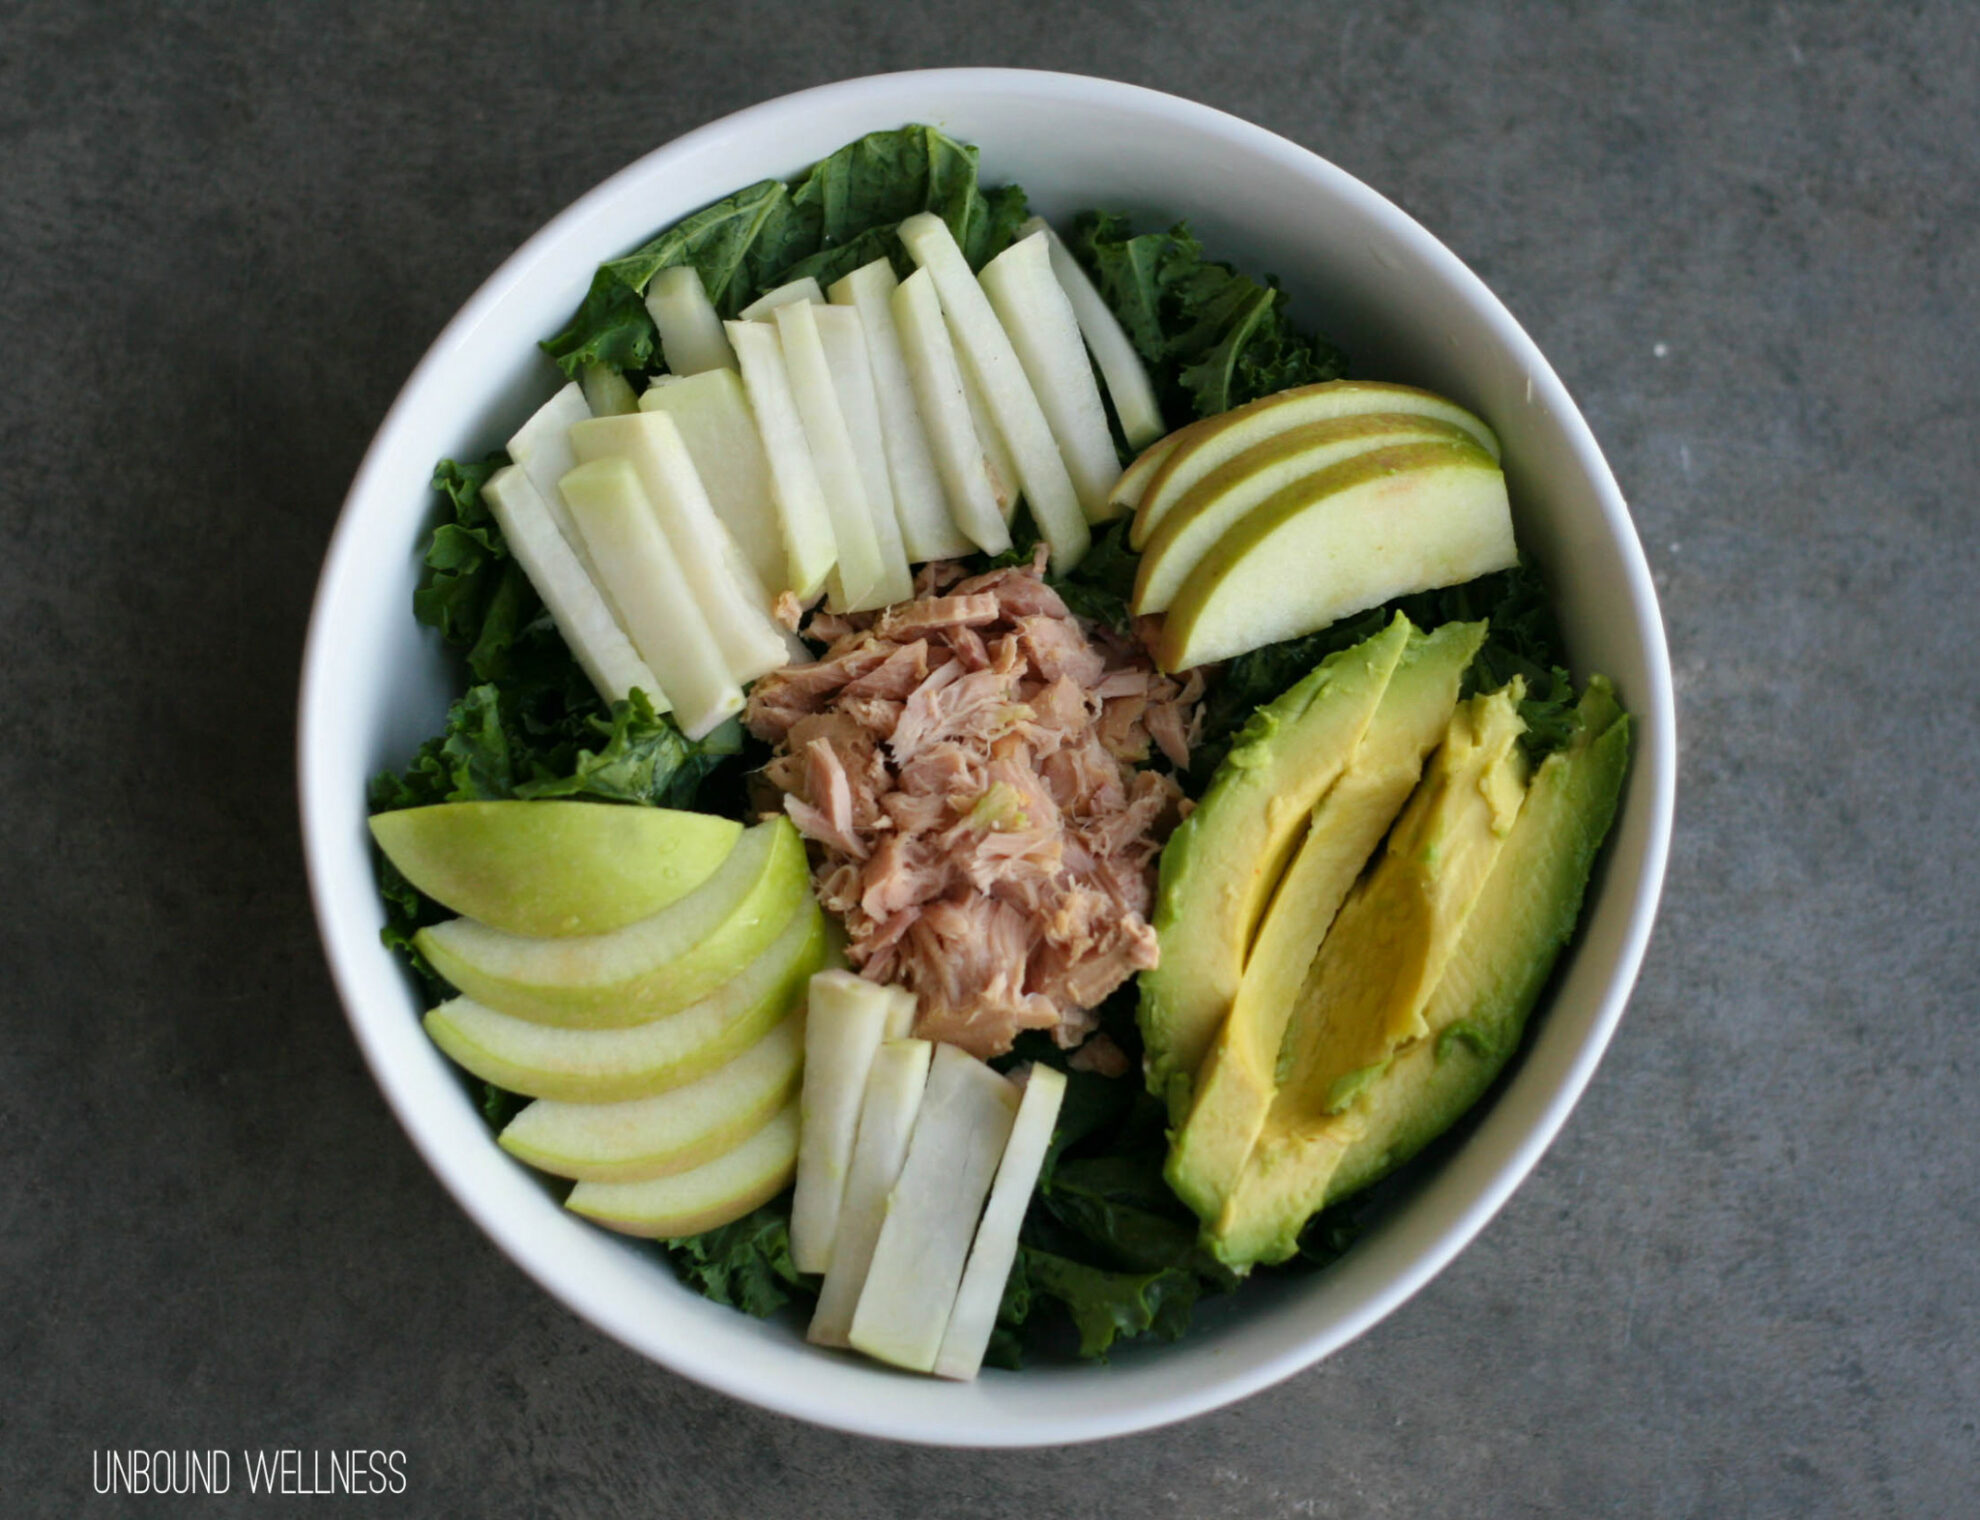  Easy Autoimmune Paleo Salad | Kale, Kohlrabi, Avocado, Apple and Tuna